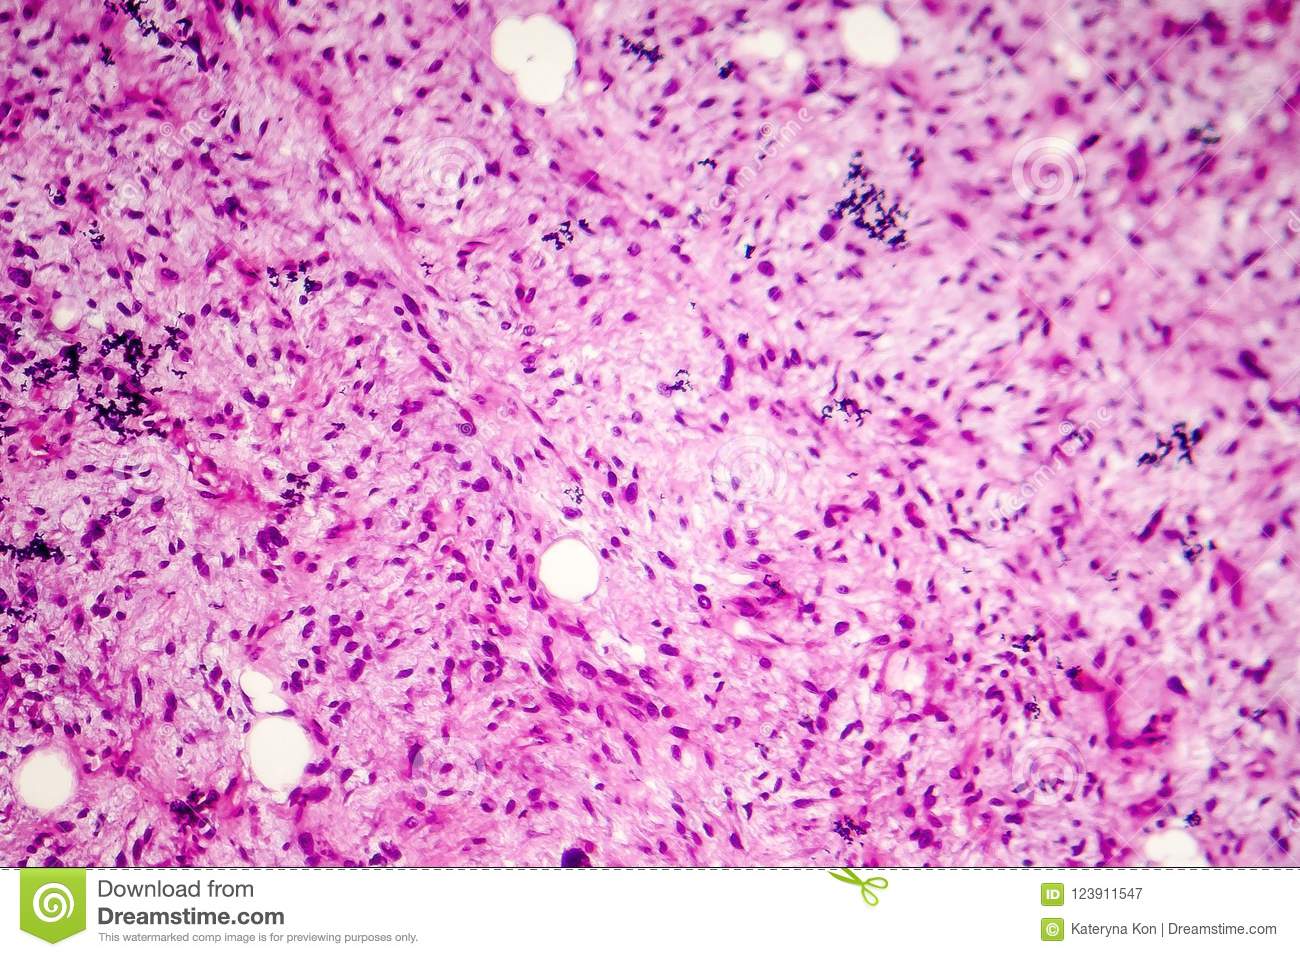 liposarcoma soft tissue sarcoma light micrograph photo under microscope liposarcoma soft tissue sarcoma 123911547 ساركوما الأنسجة الرخوة (Soft Tissue Sarcoma) مجلة نقطة العلمية